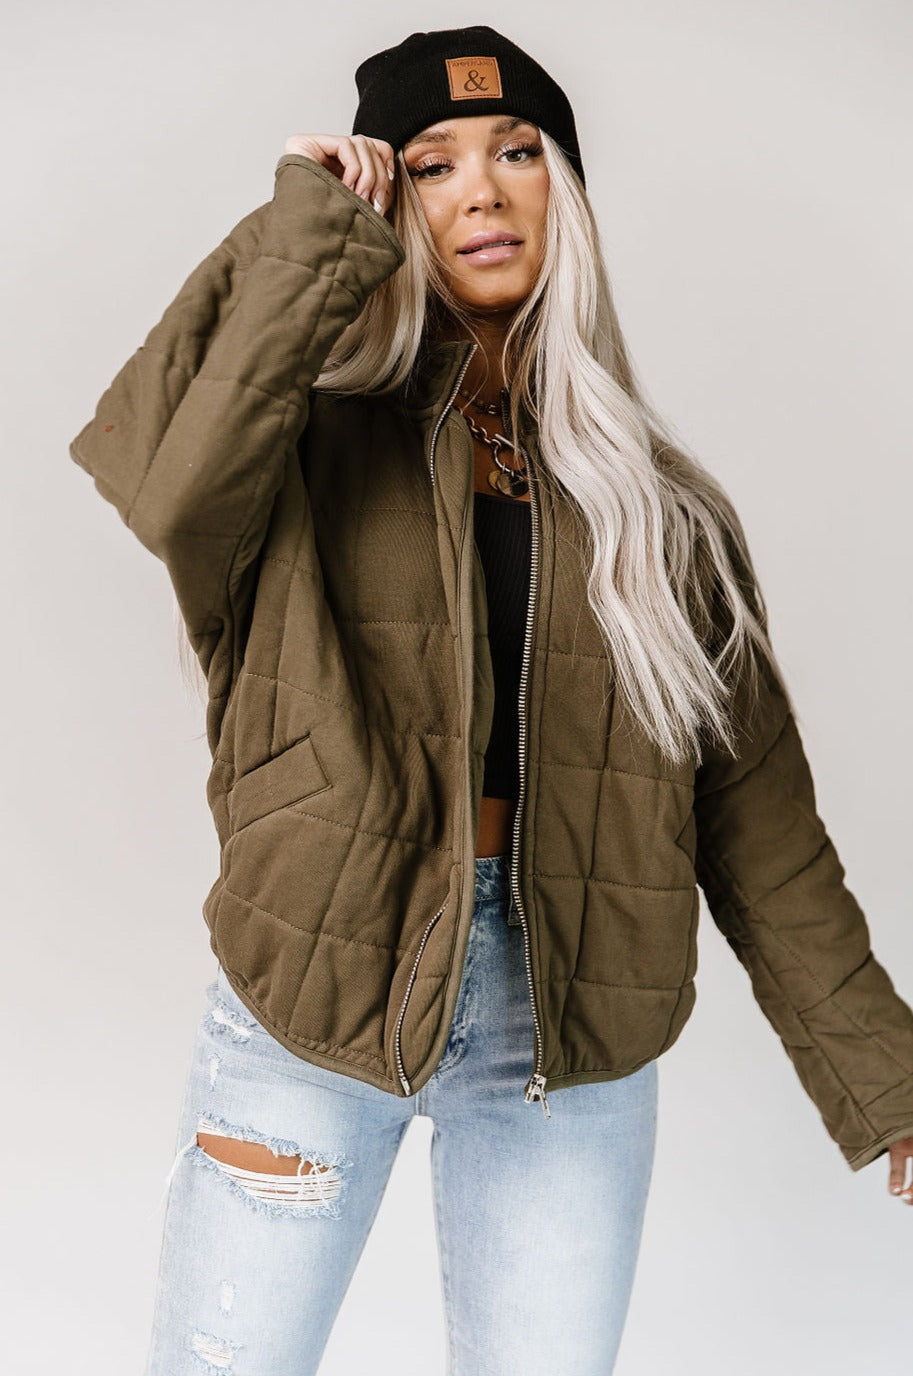 Below Zero Quilted Jacket - Olive - Mindy Mae's Marketcomfy cute hoodies